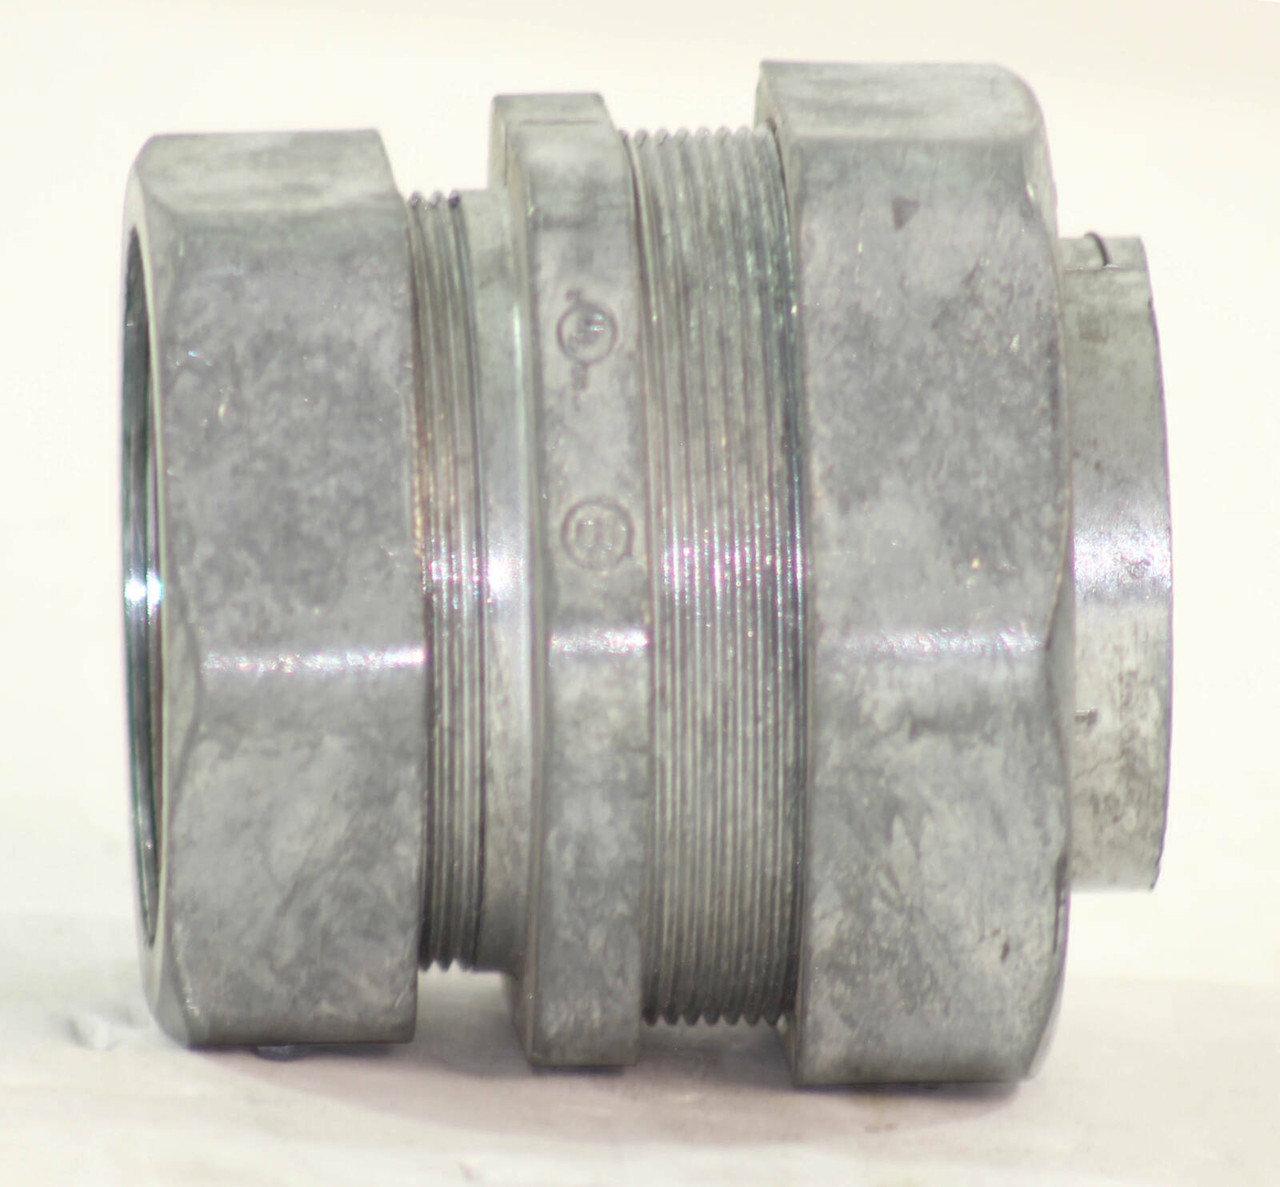 Bridgeport 4365-DC Transition Coupling Material: Zinc Die Cast Size: 2 Inch Liquid Tight to EMT